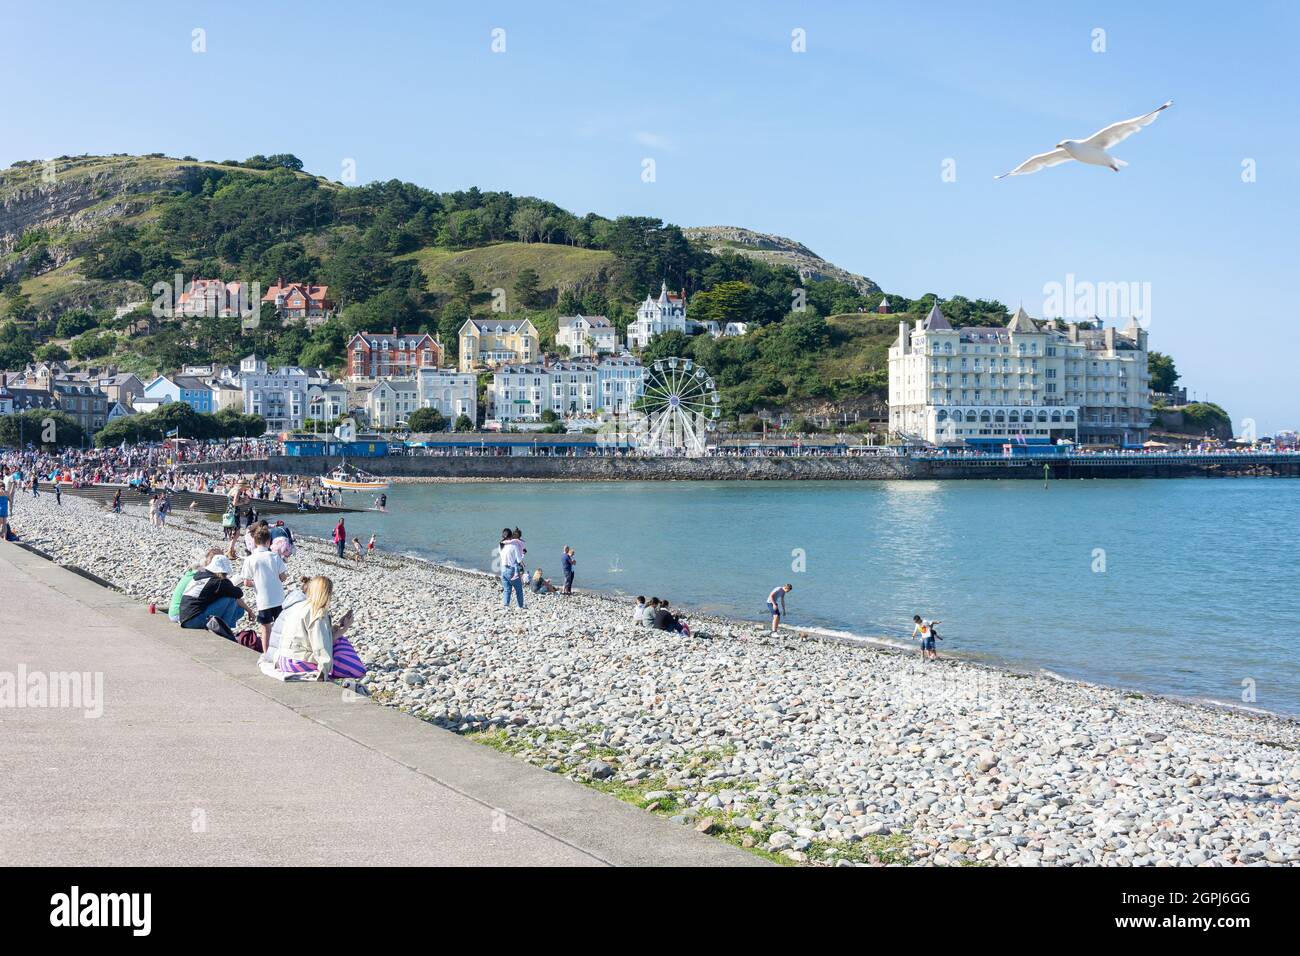 Beach promenade, Llandudno, Conwy County Borough, pays de Galles, Royaume-Uni Banque D'Images